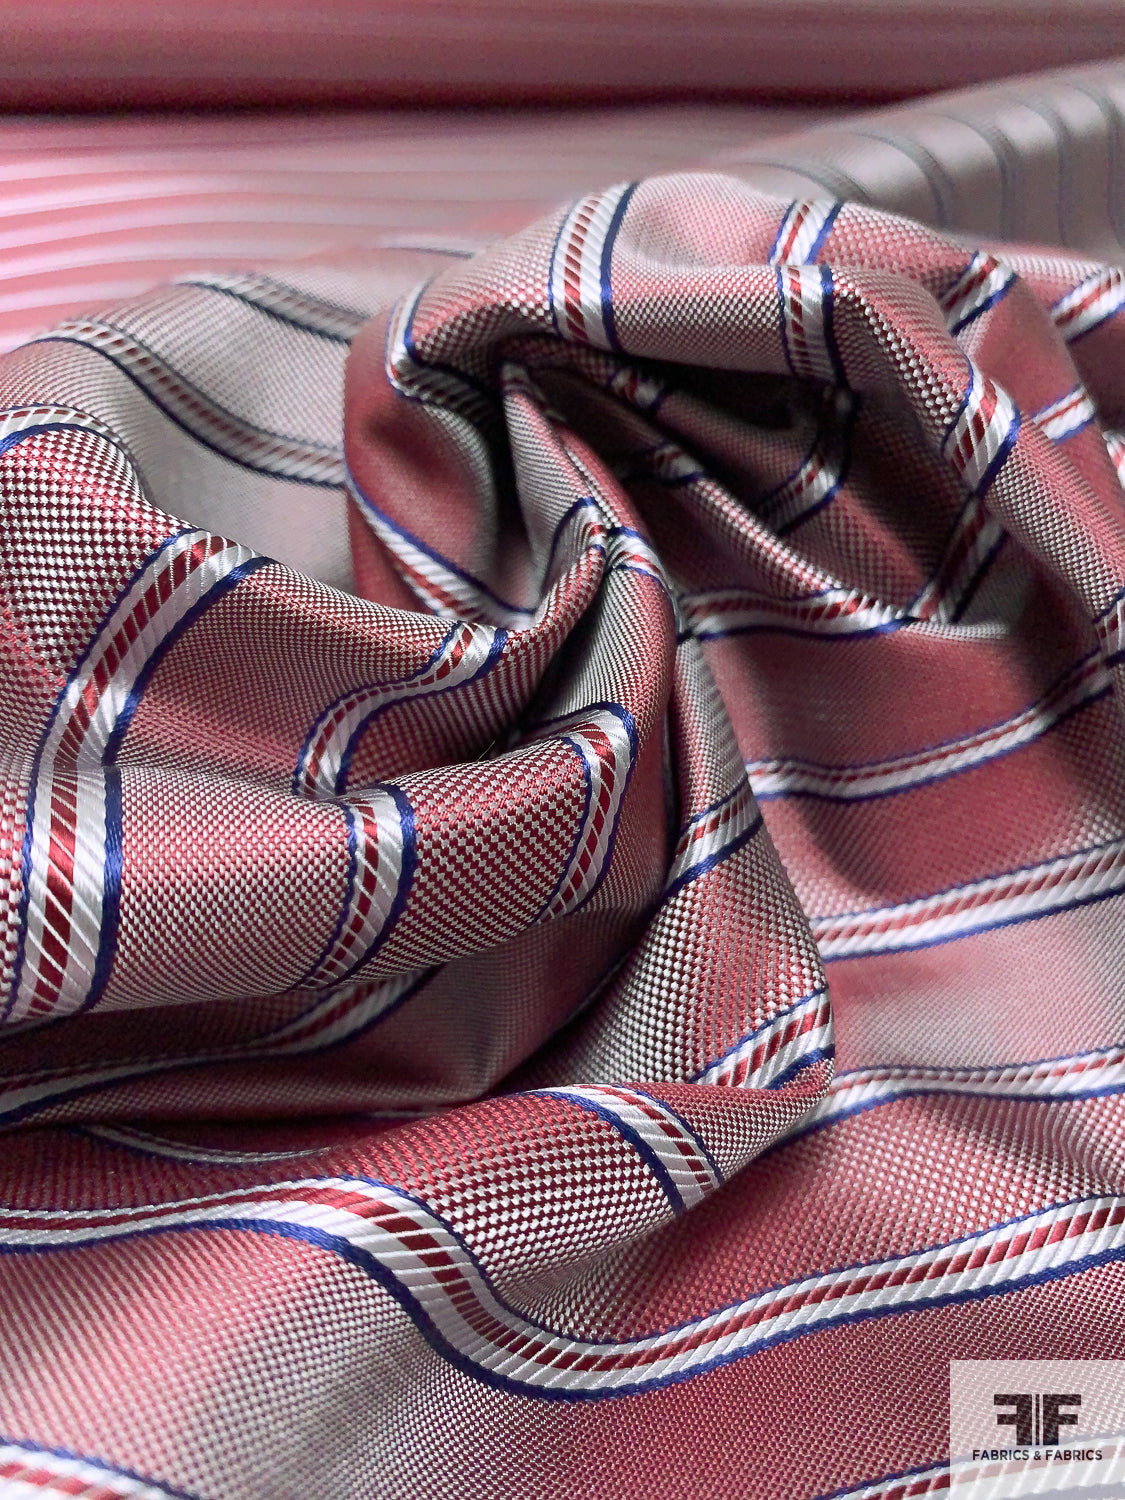 Rope-Look Striped Silk Necktie Jacquard Brocade - Maroon / Blue / White